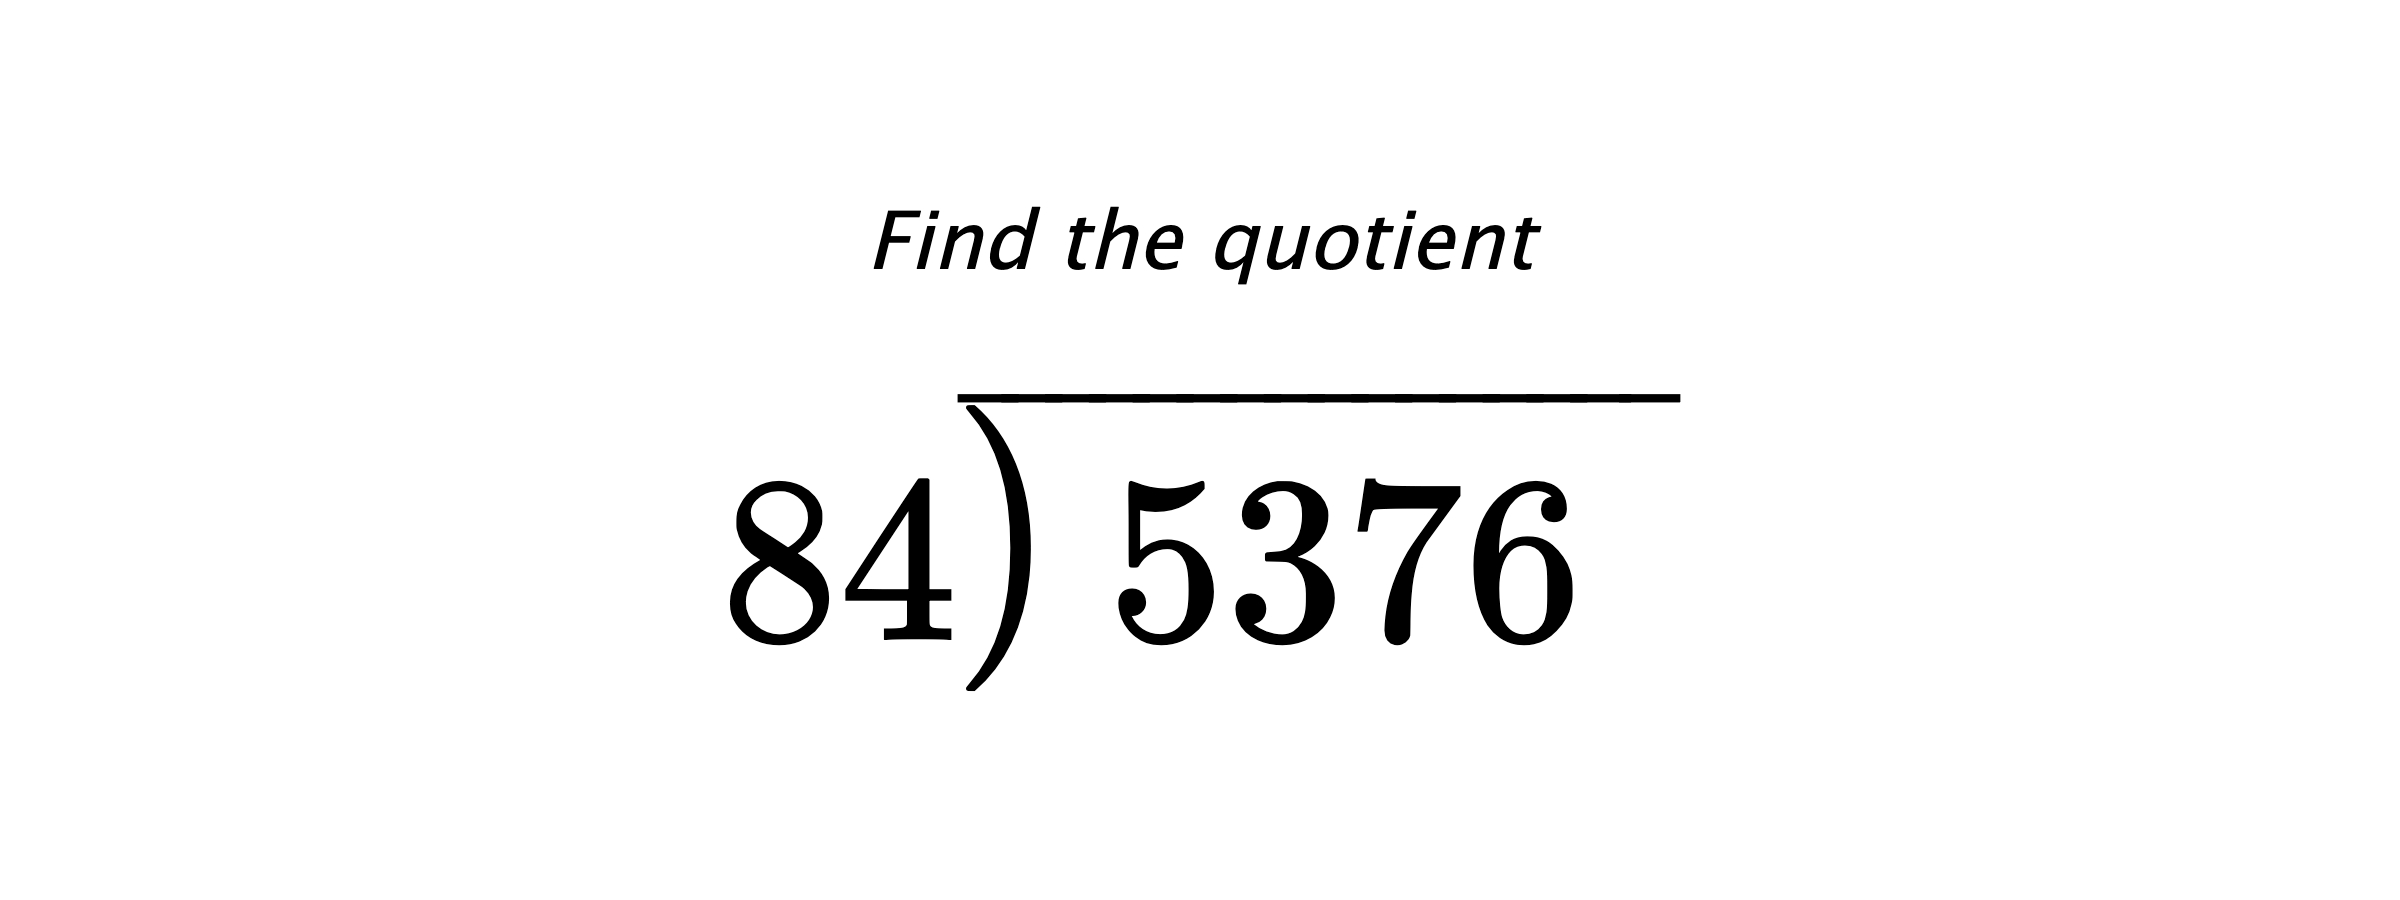 Find the quotient $ 84{\overline{\smash{\raise.3ex\hbox{$\big)$}}\,5376\phantom{)}}} $